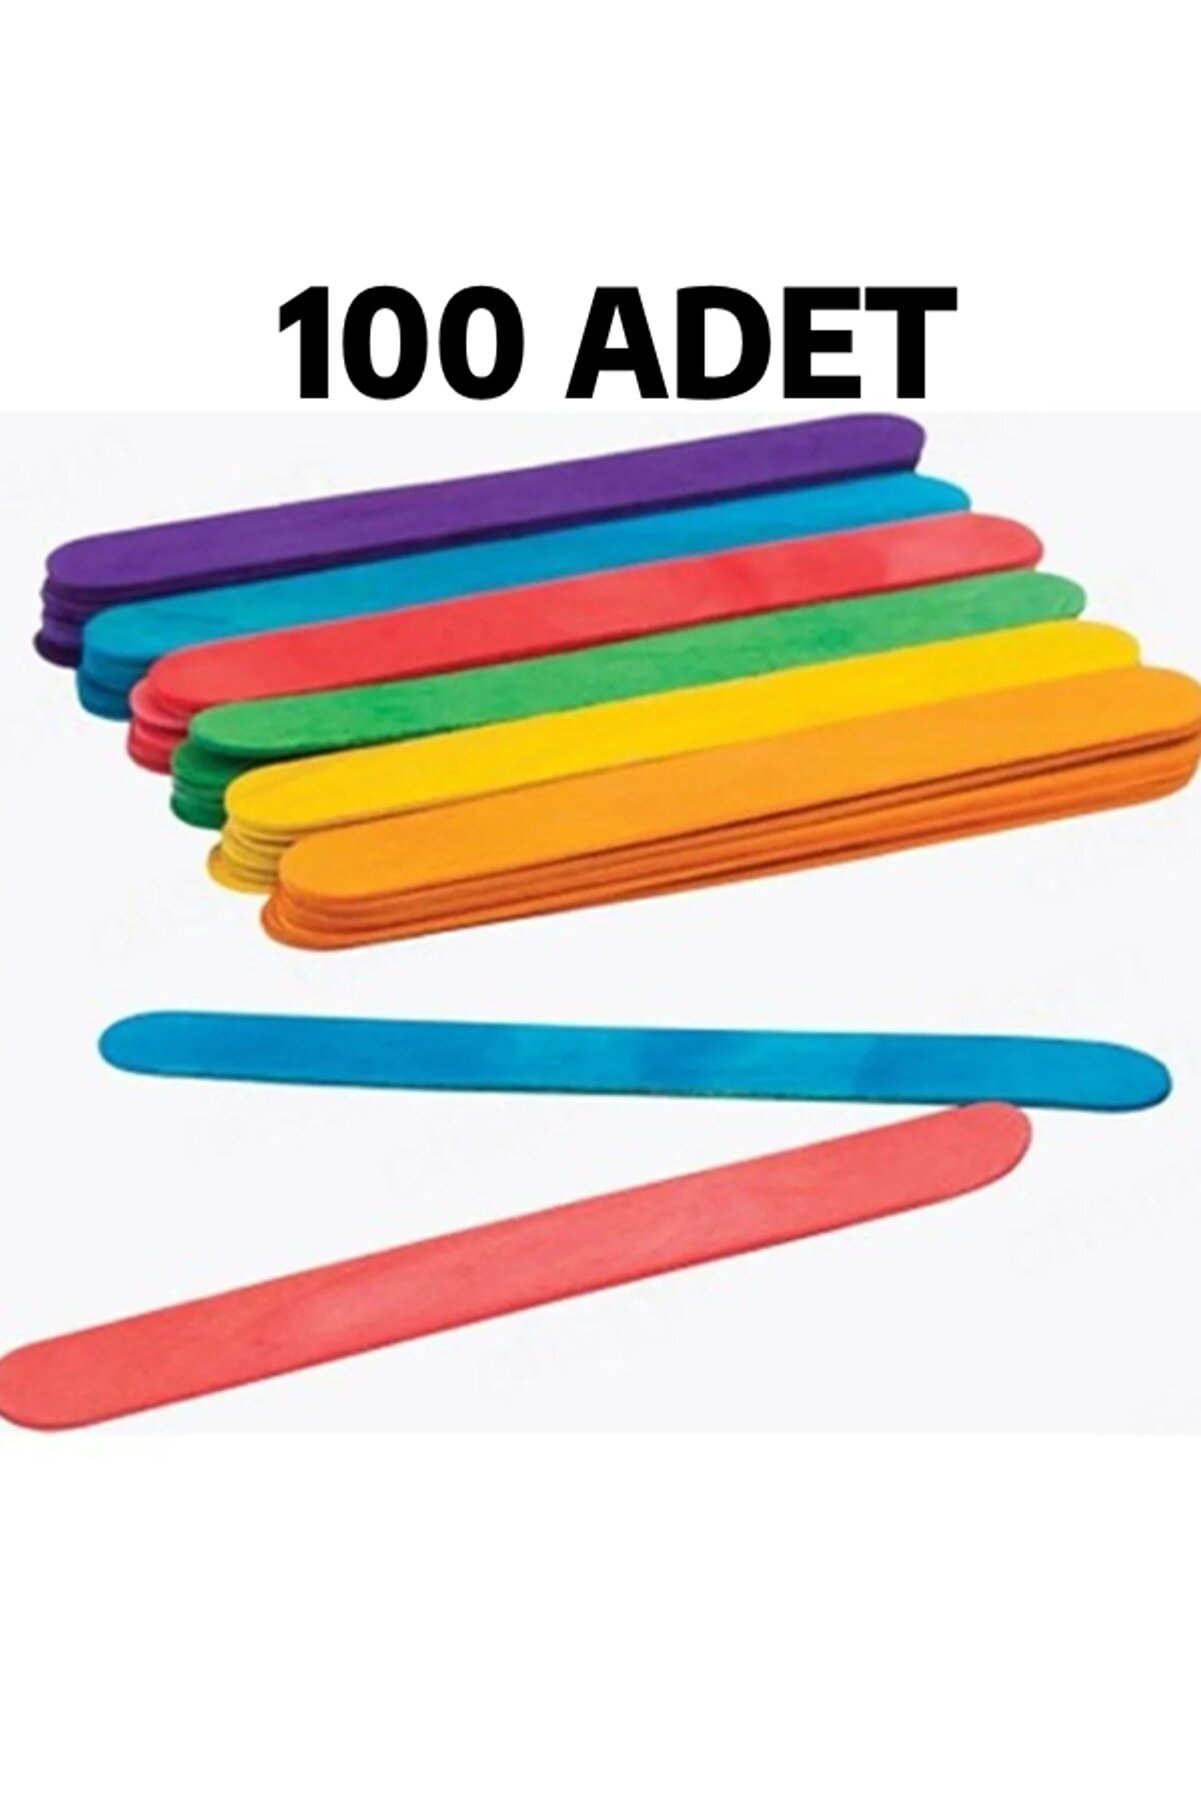 nistabolje 100 Adet Renkli Ahşap Büyük Geniş Dil Çubuğu Abeslang Dondurma Dil Basma Çubuğu Renkli